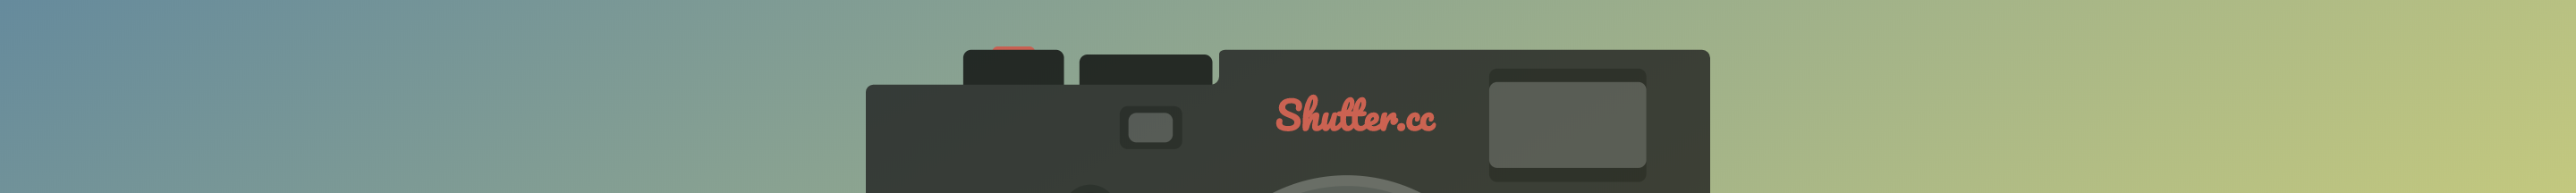 Shutter.cc Header Image